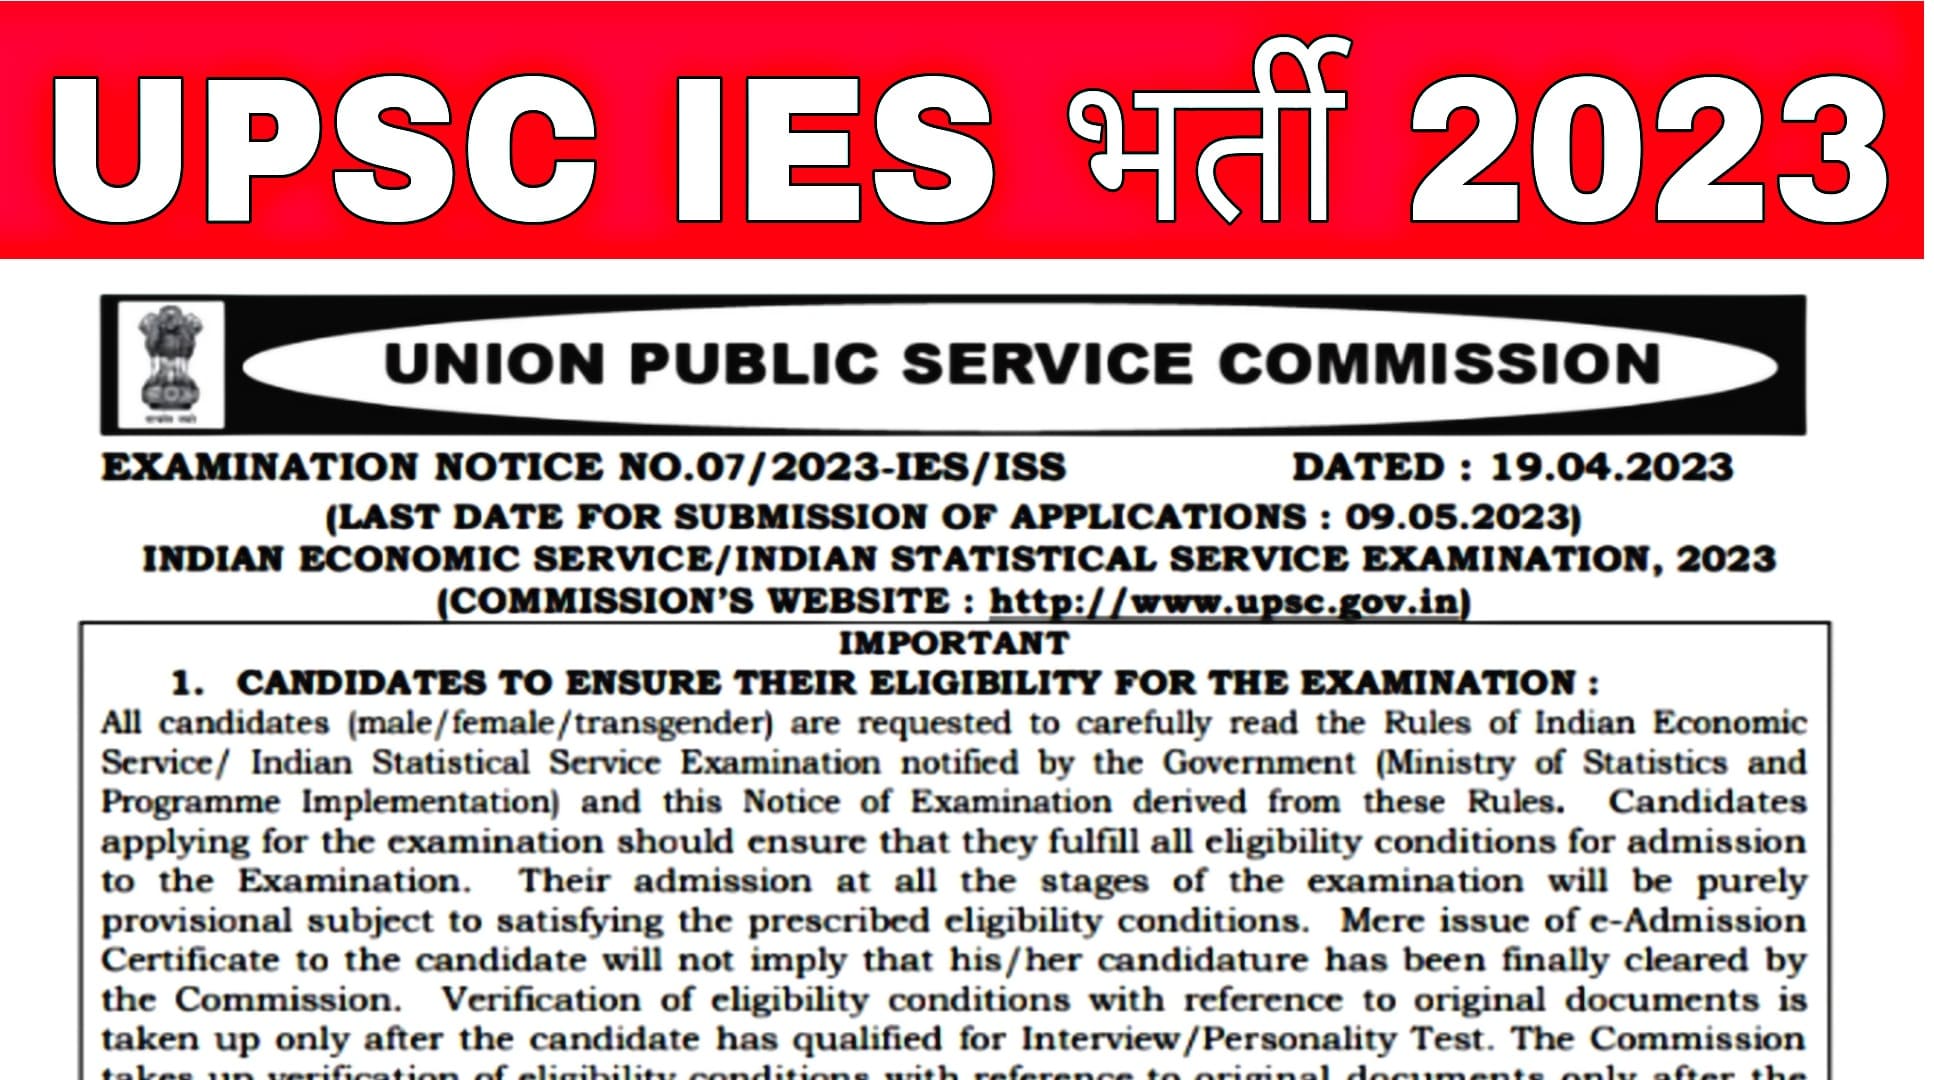 UPSC IES Recruitment 2023